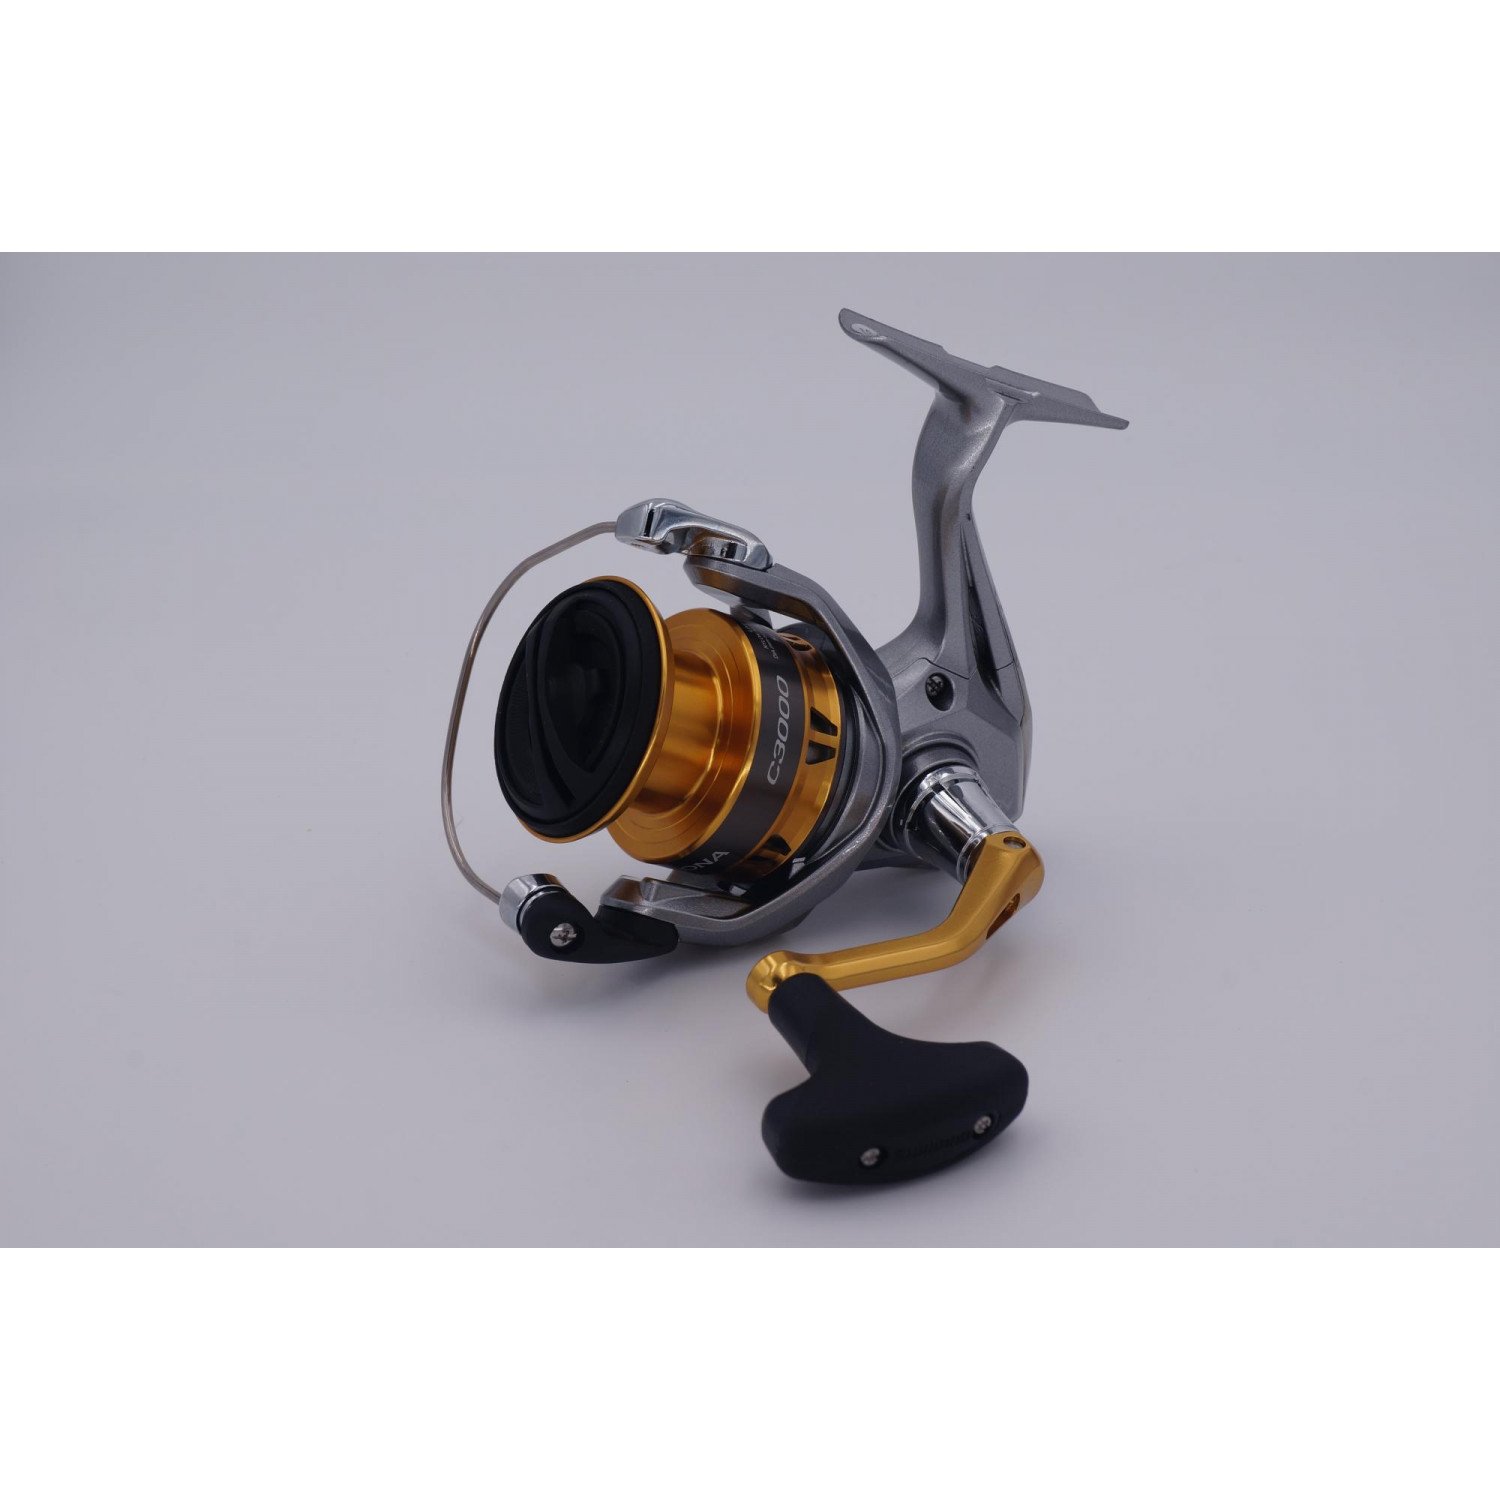 Comfortable Spinning Reels Shimano Sedona FI 8000 Spinning Fishing Reel Gift